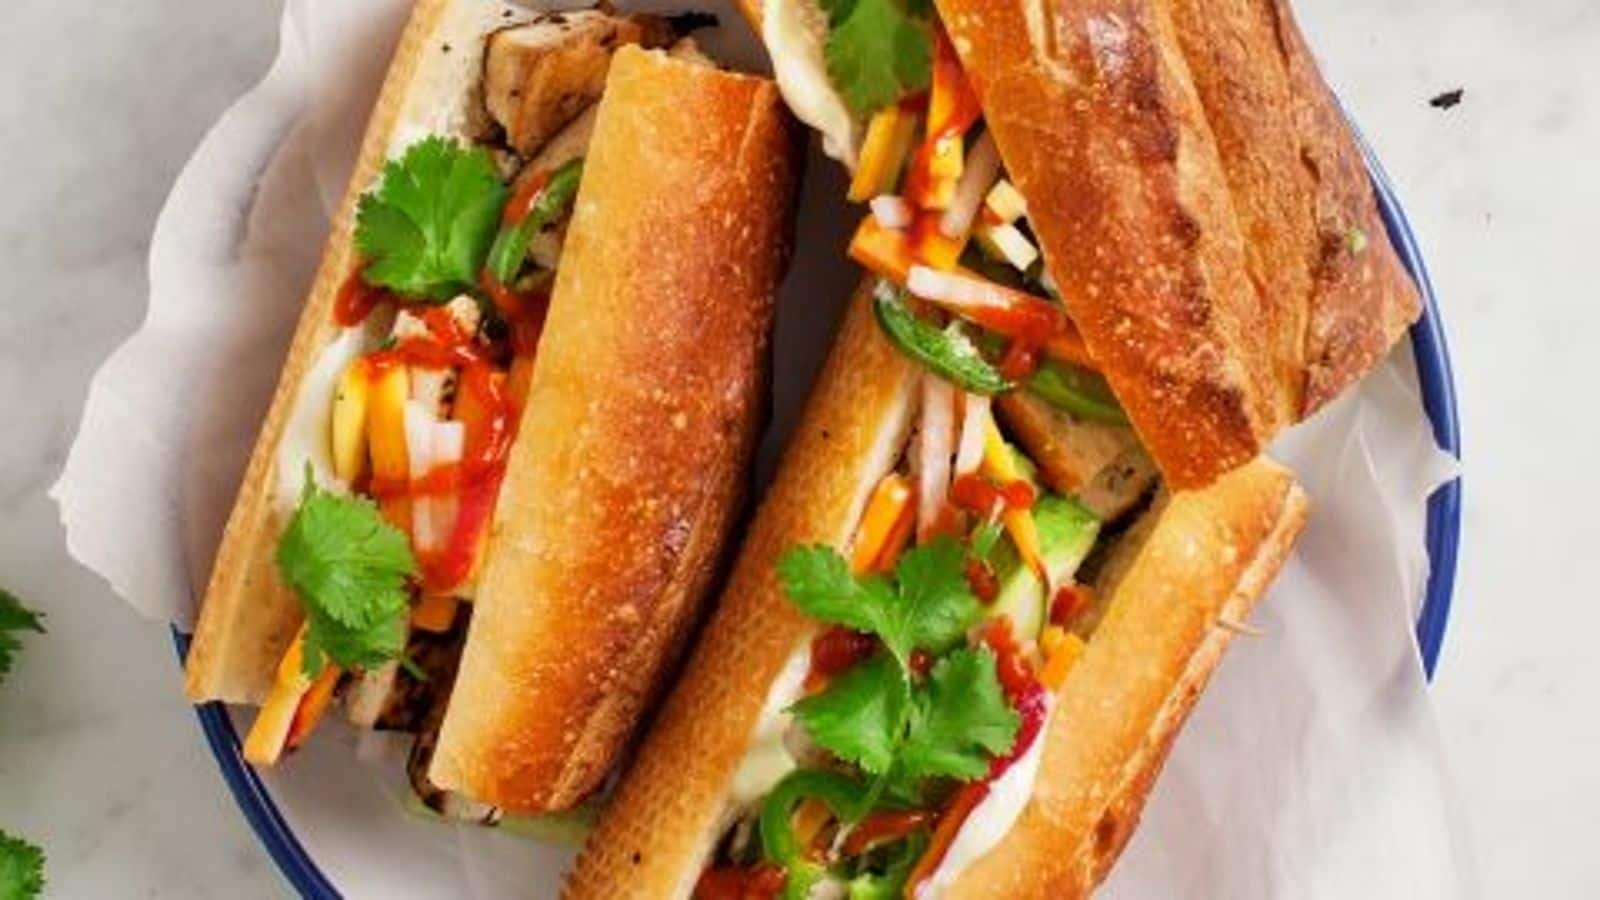 Check out this fusion Vietnamese banh mi sandwich recipe